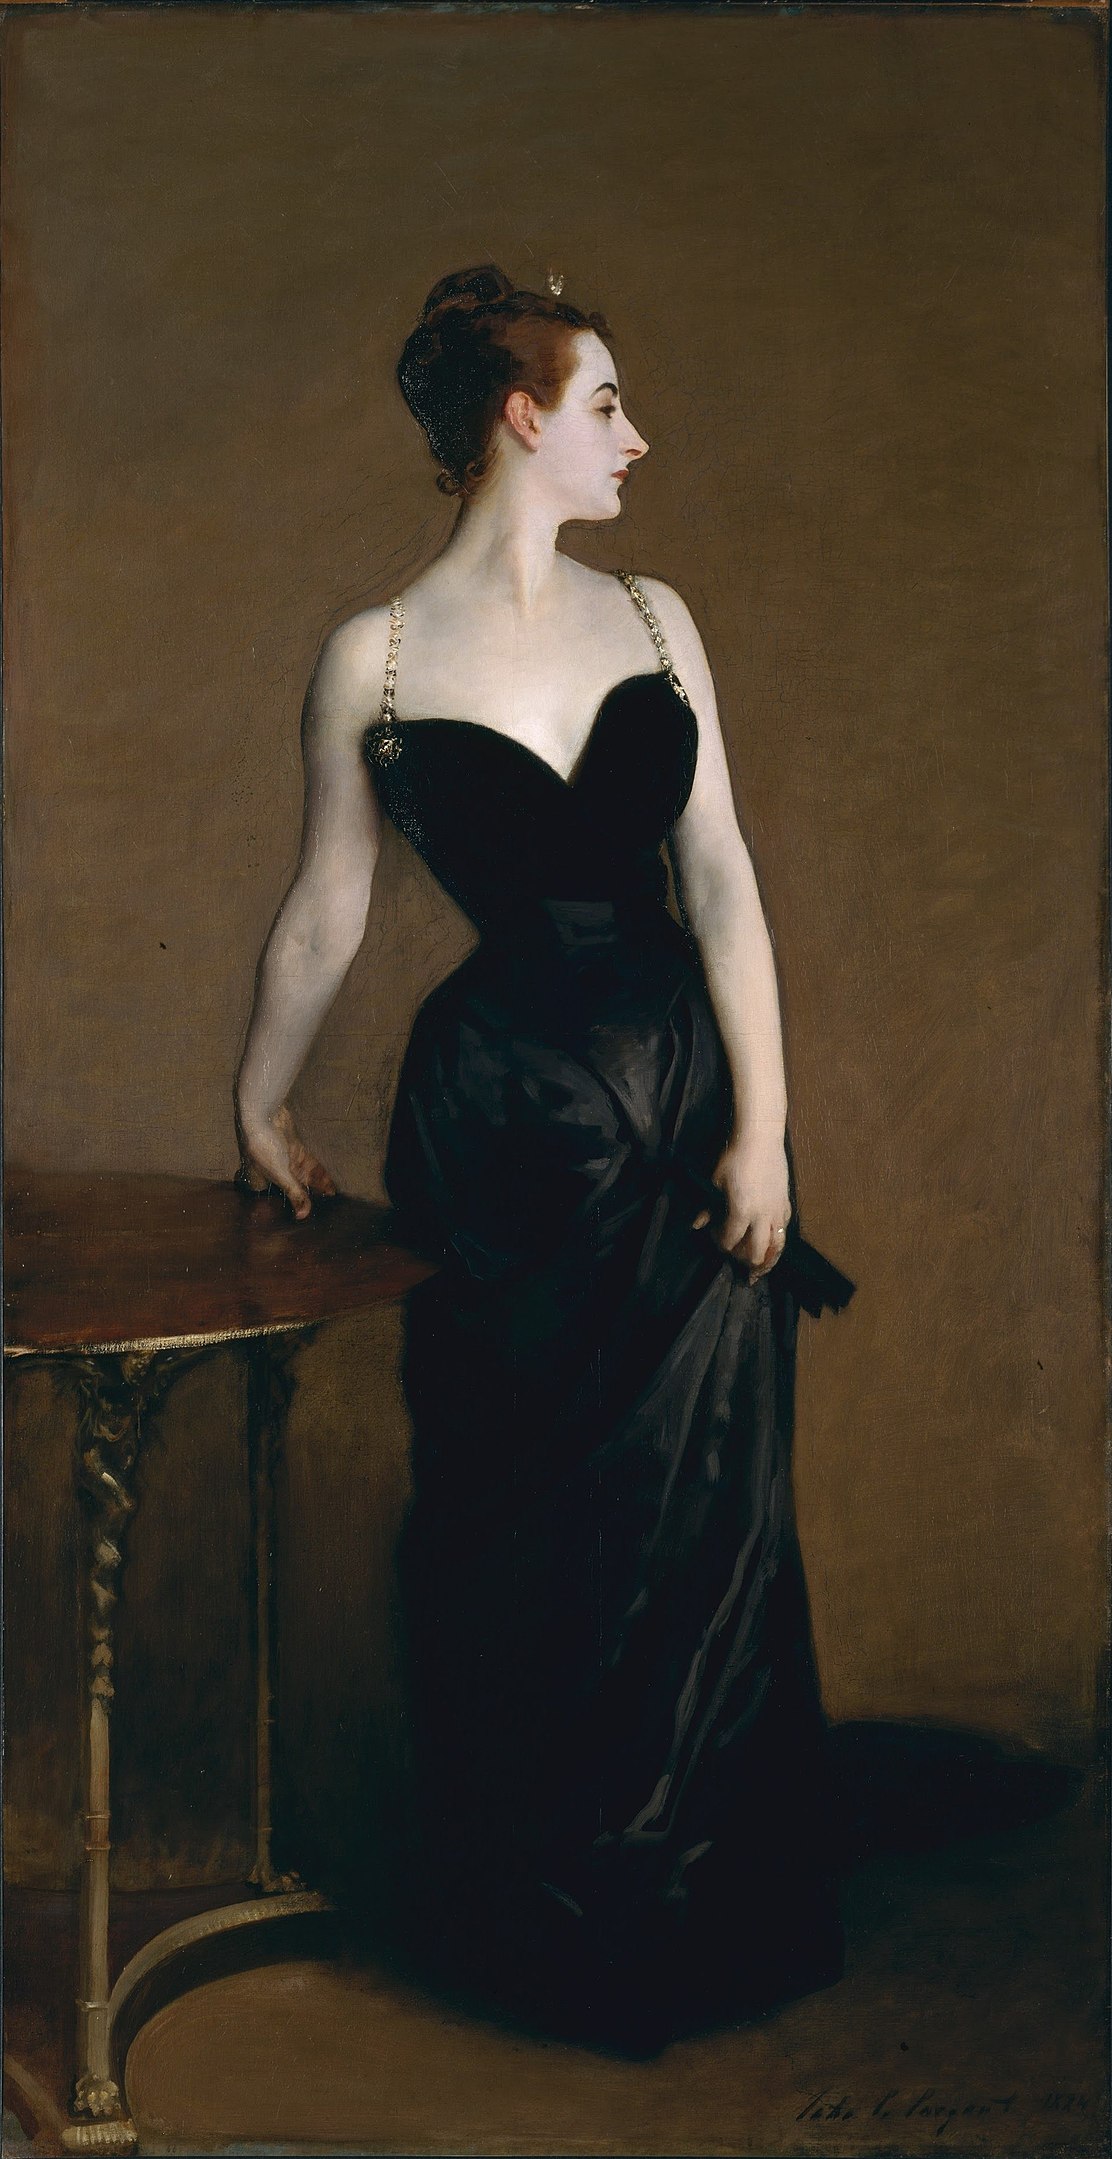 Madame X by John Singer Sargent - 1884 - 234.95 × 109.86 cm Metropolitan Museum of Art